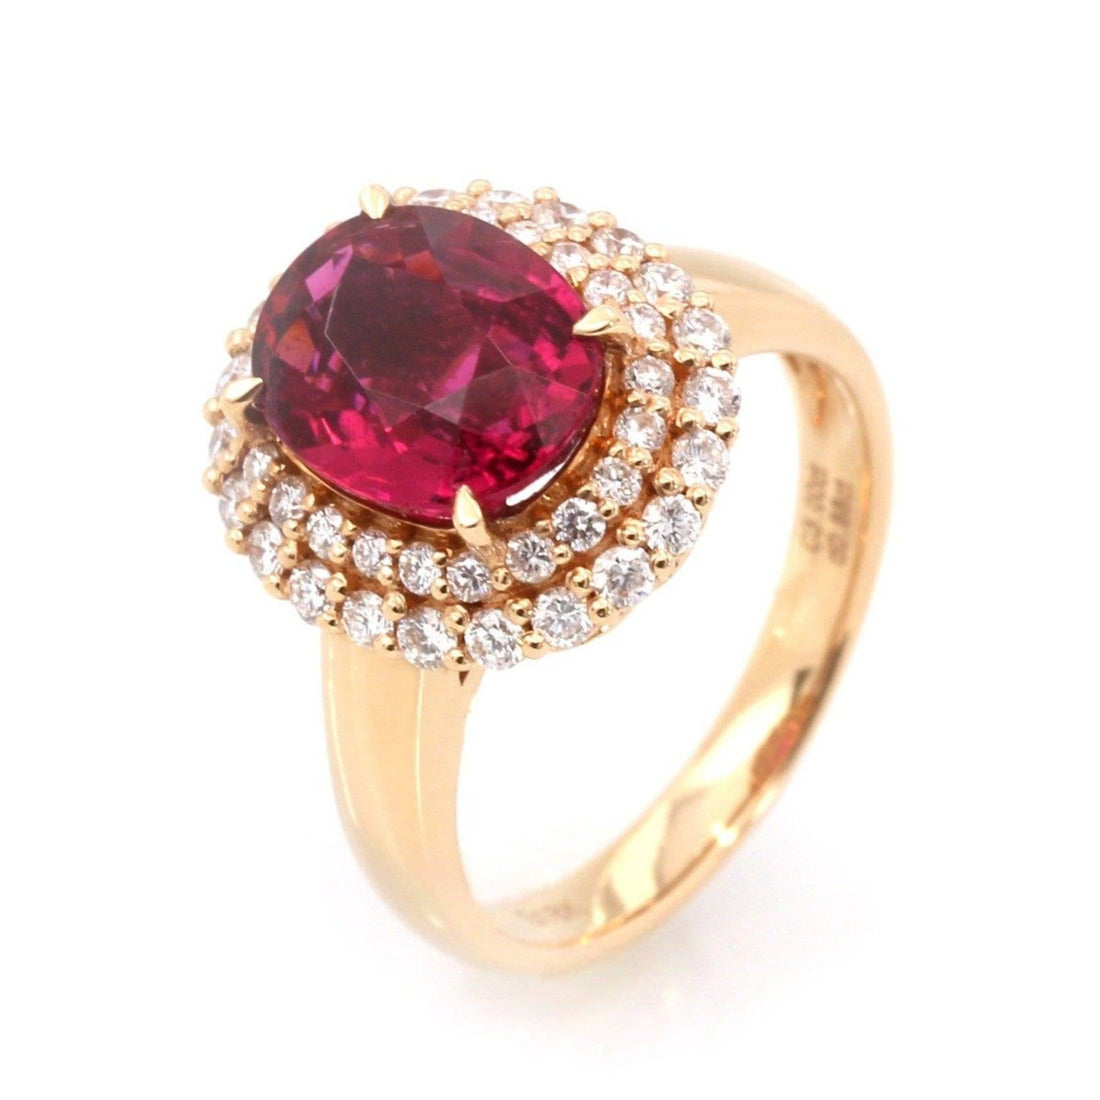 Baikalla Jewelry gold tourmaline ring 6.5 18k Rose Gold Natural Red Tourmaline with Diamonds Halo Ring